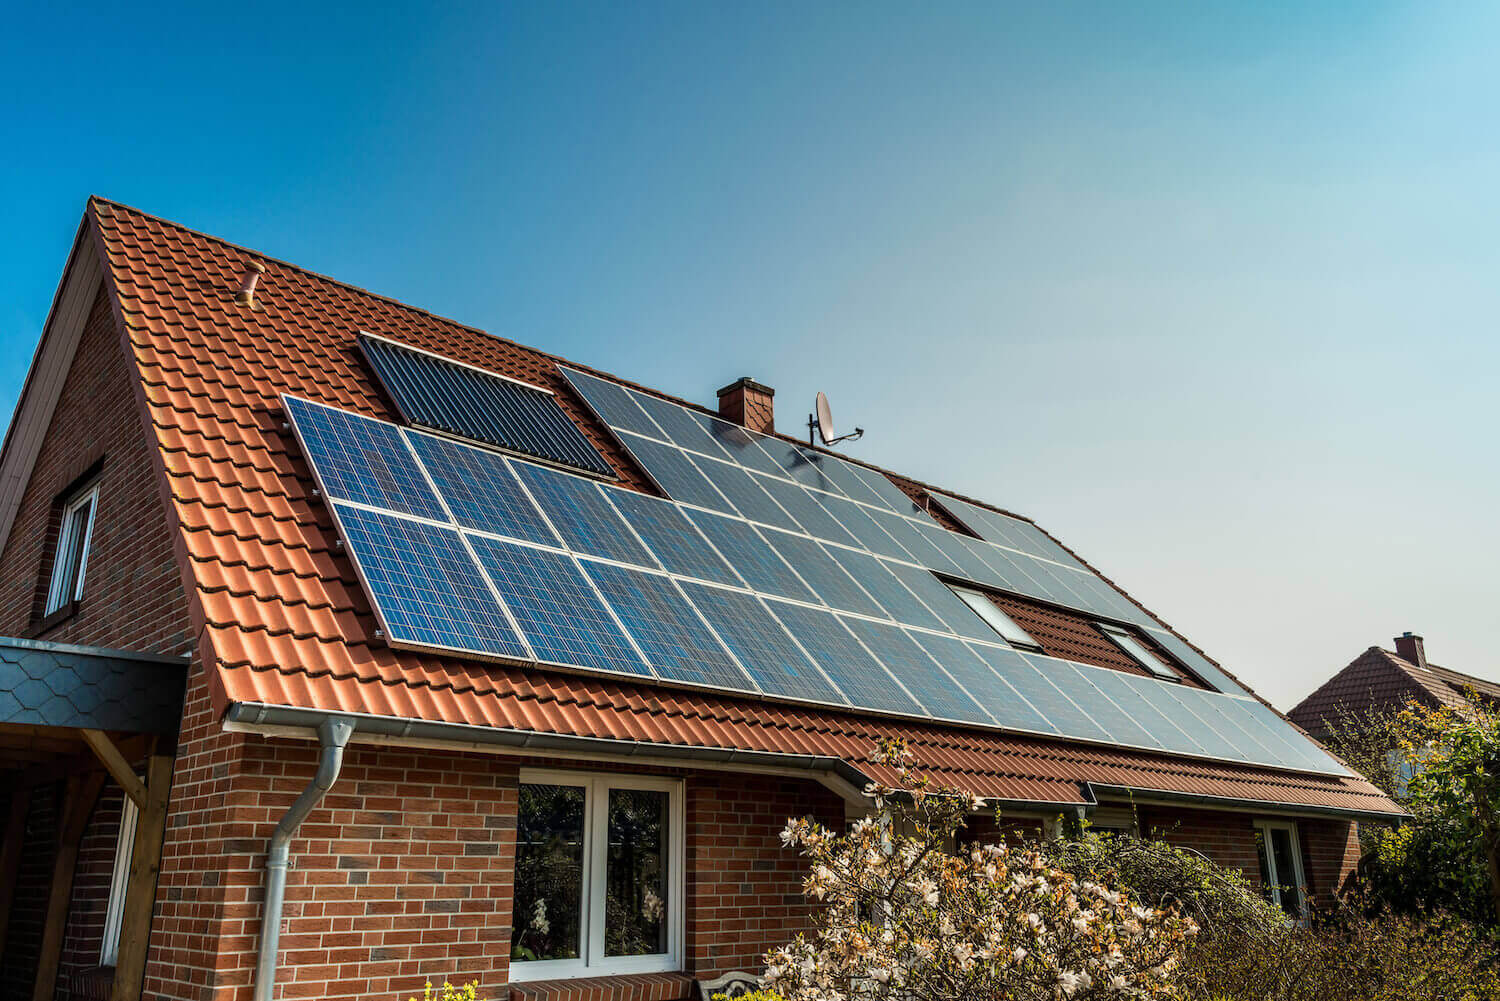 Solar panels on an Australian house's roof